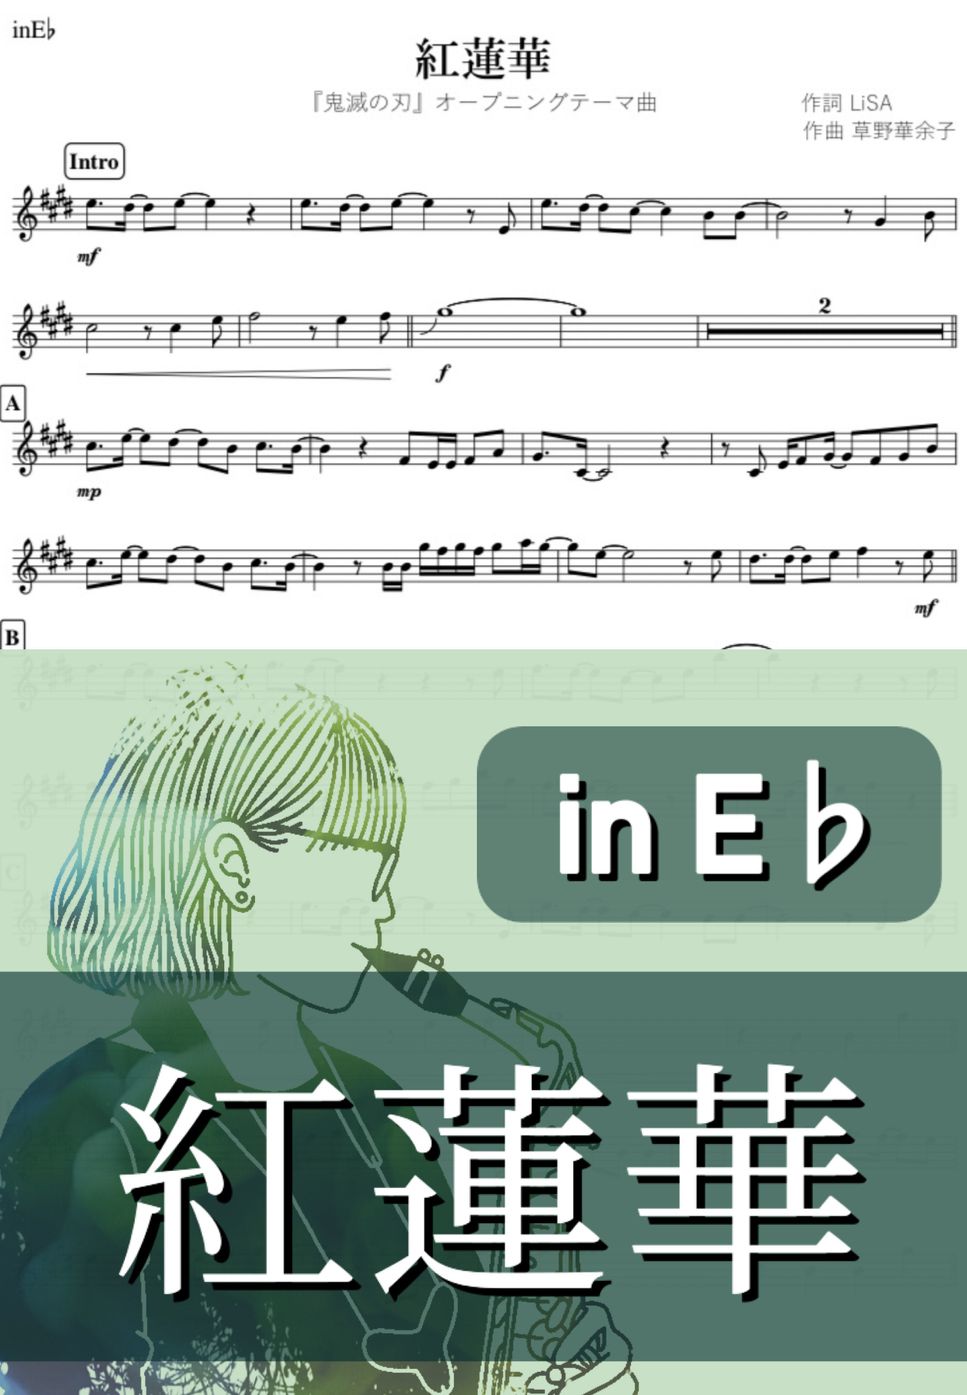 鬼滅の刃 - 紅蓮華 (E♭) by kanamusic